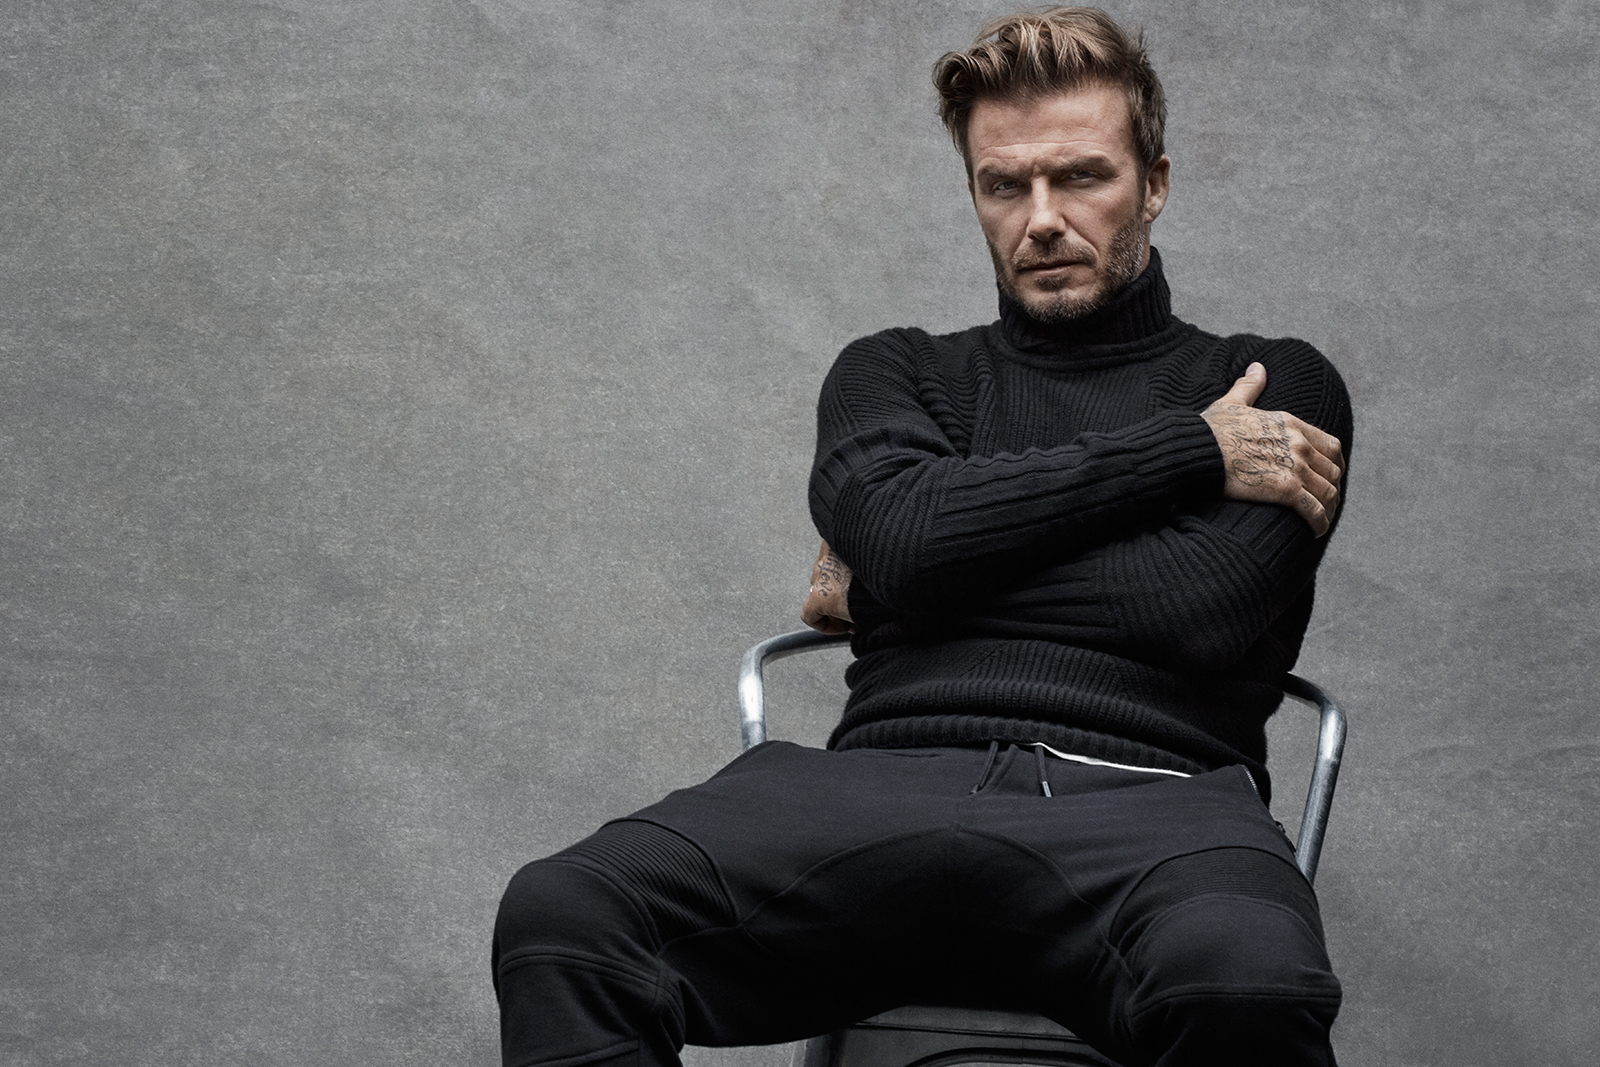 David Beckham in Underwear Soccer Star Muscular Pose Beefcake Hunk  Photograph - Etsy